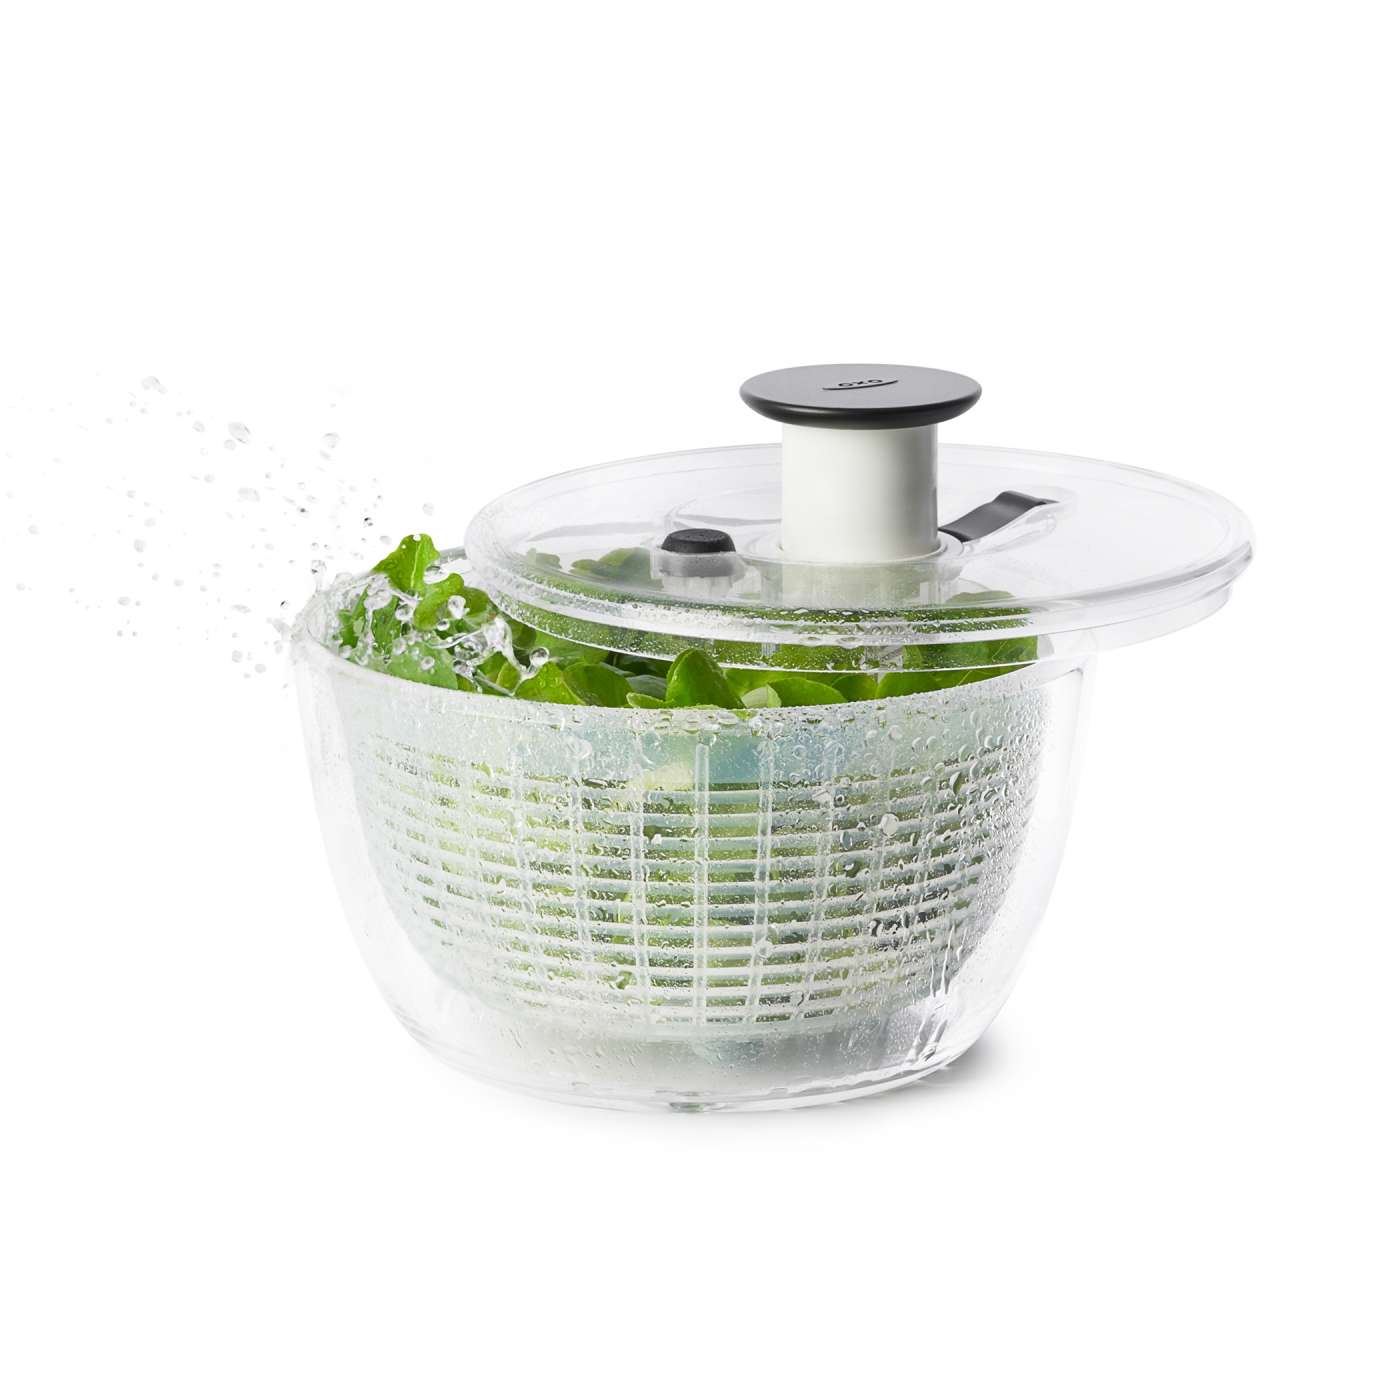 OXO Good Grips Little Salad & Herb Spinner 4.0 Cookware Kitchen Utensils